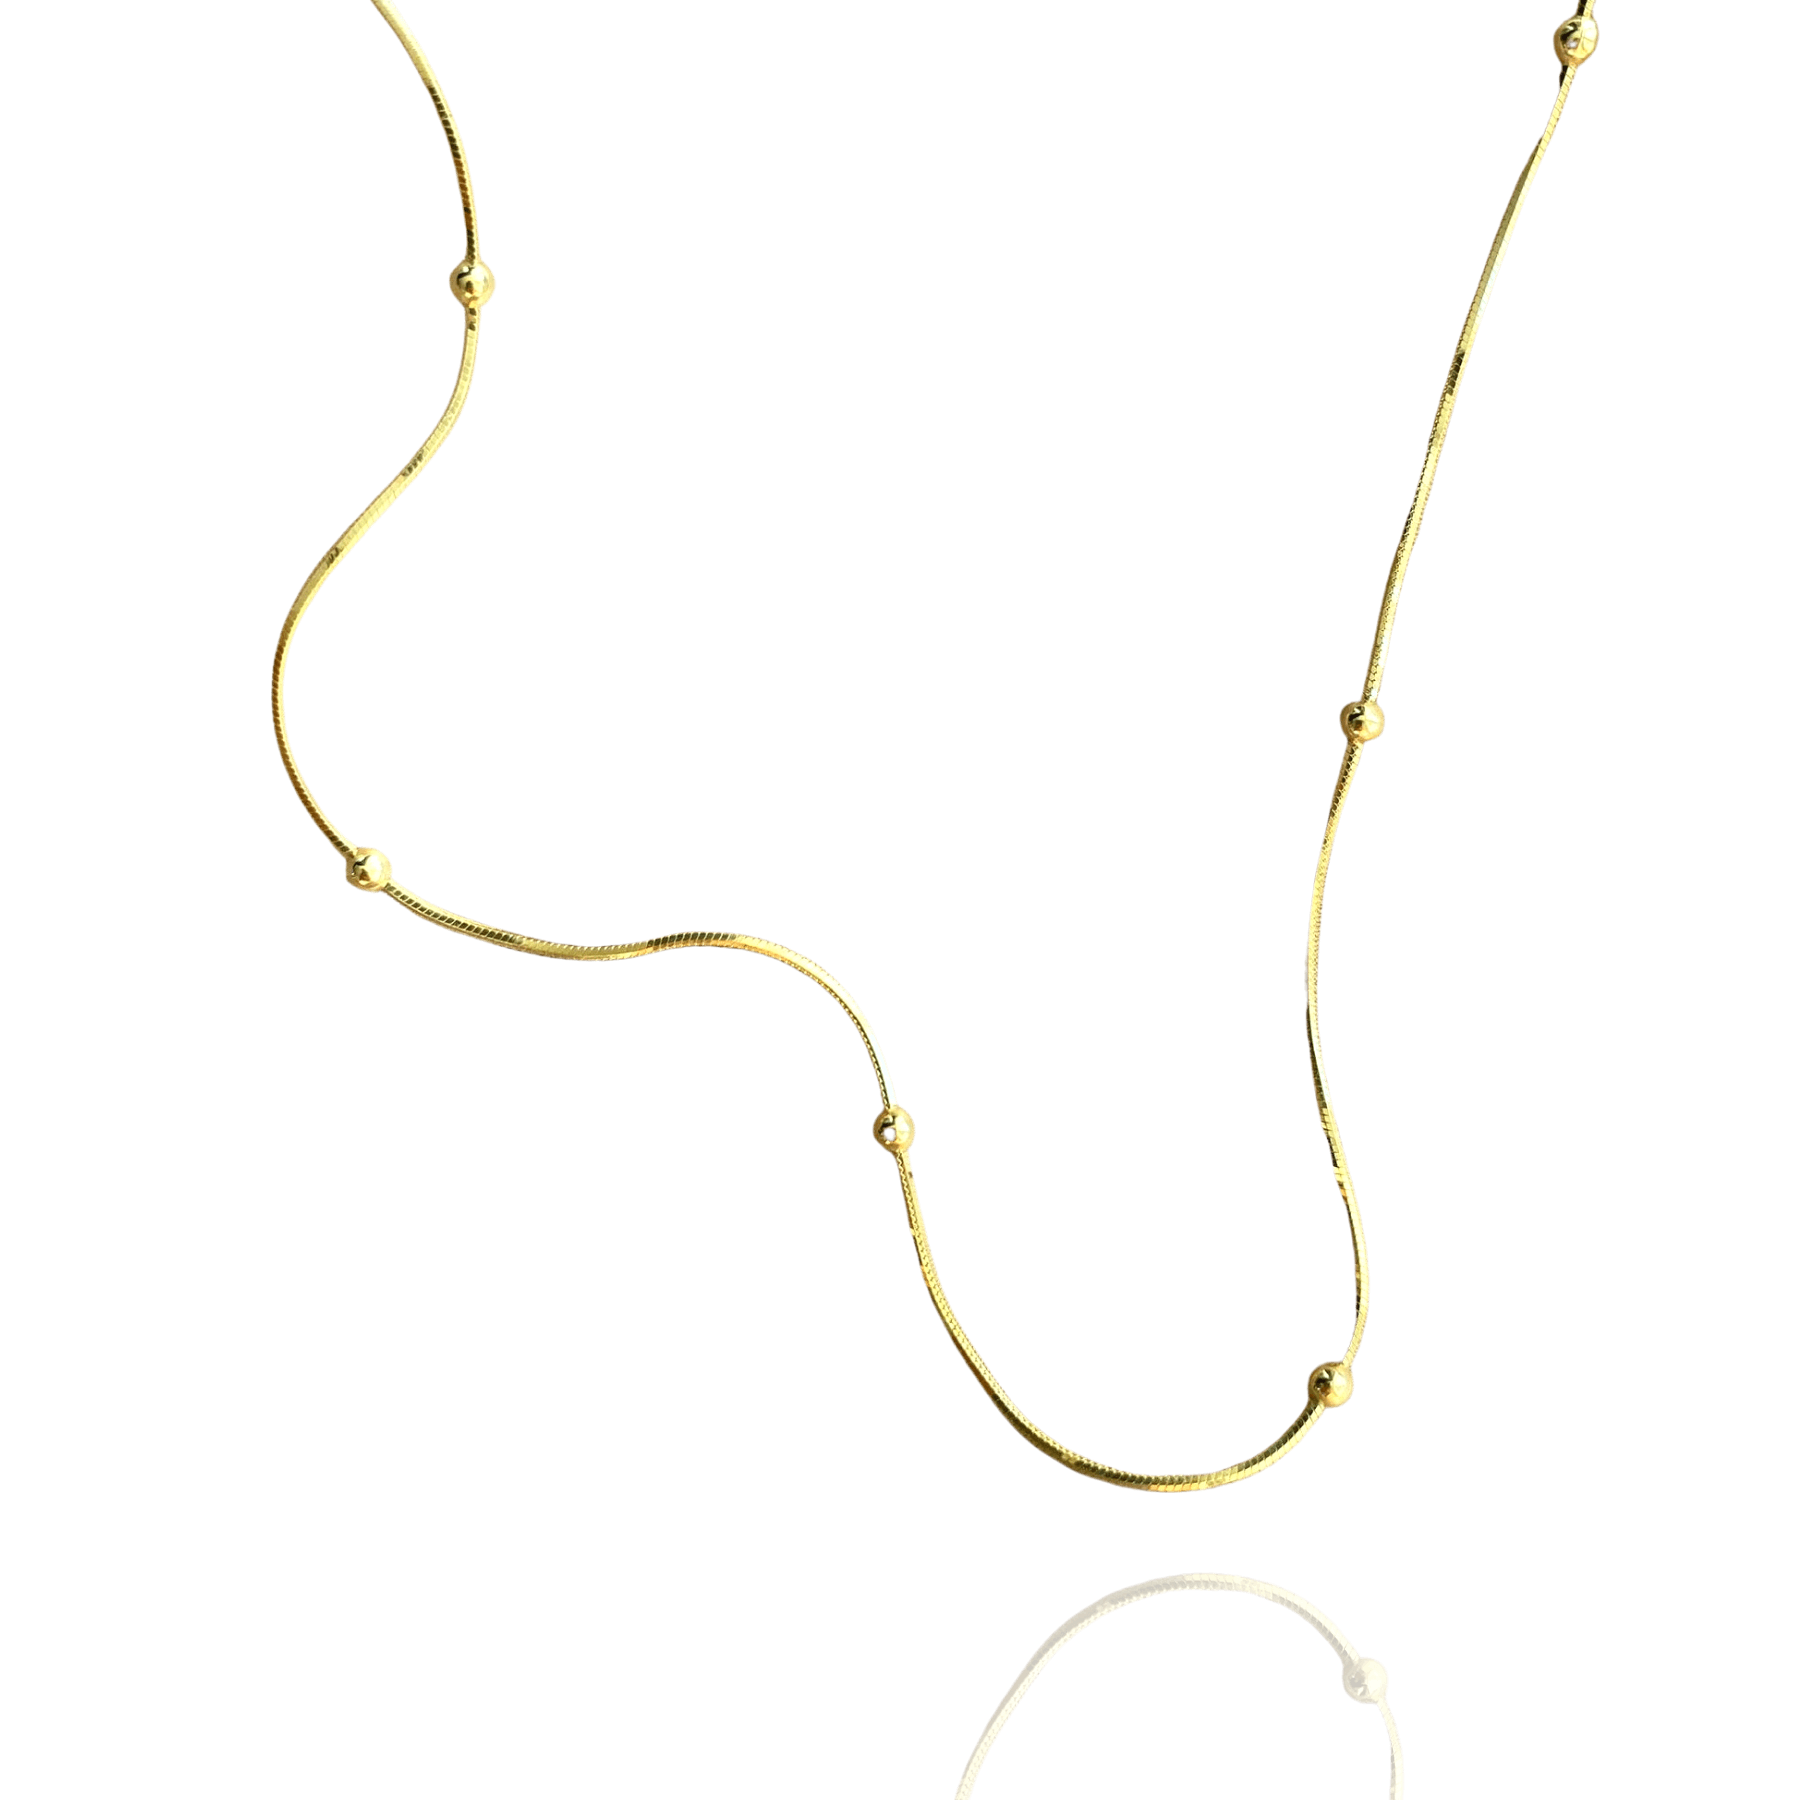 Itallian Bead Chain Sterling Silver Necklace - Spero London